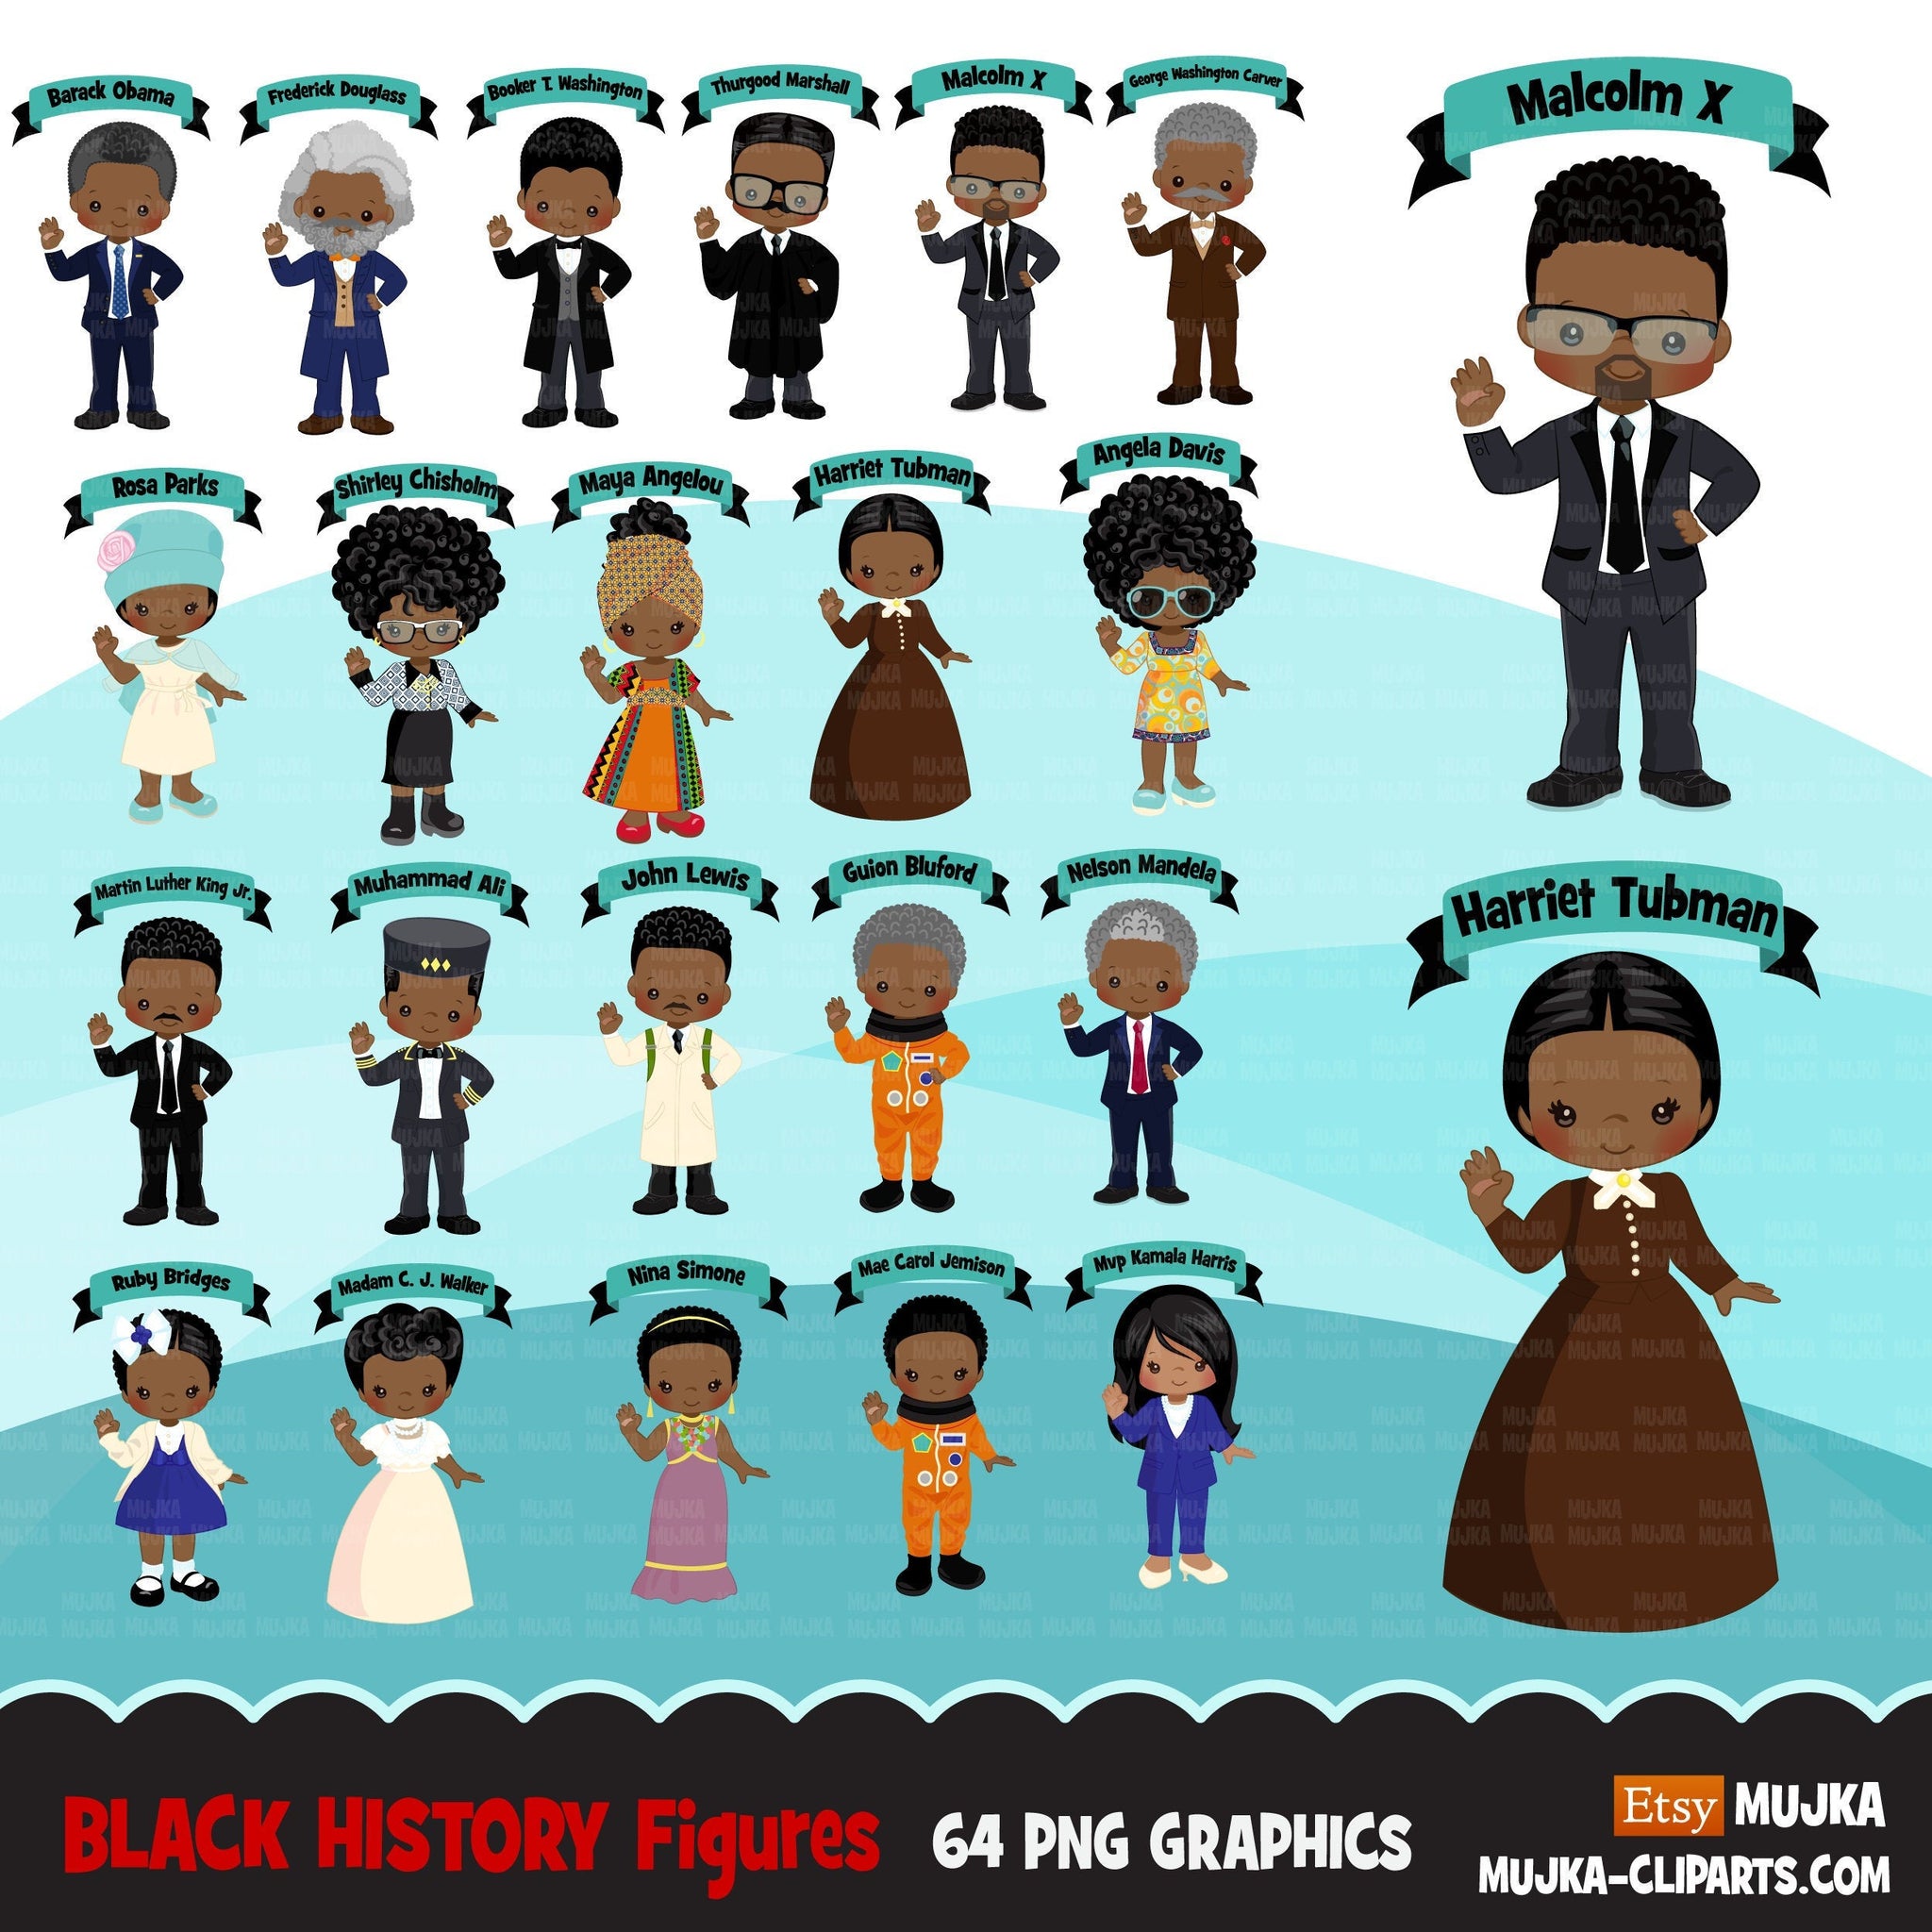 Black history figures clipart BUNDLE, Malcolm X, Kamala Harris, Barack Obama, Ruby Bridges, Mae Jemison, Shirley Chisholm  clip art PNG